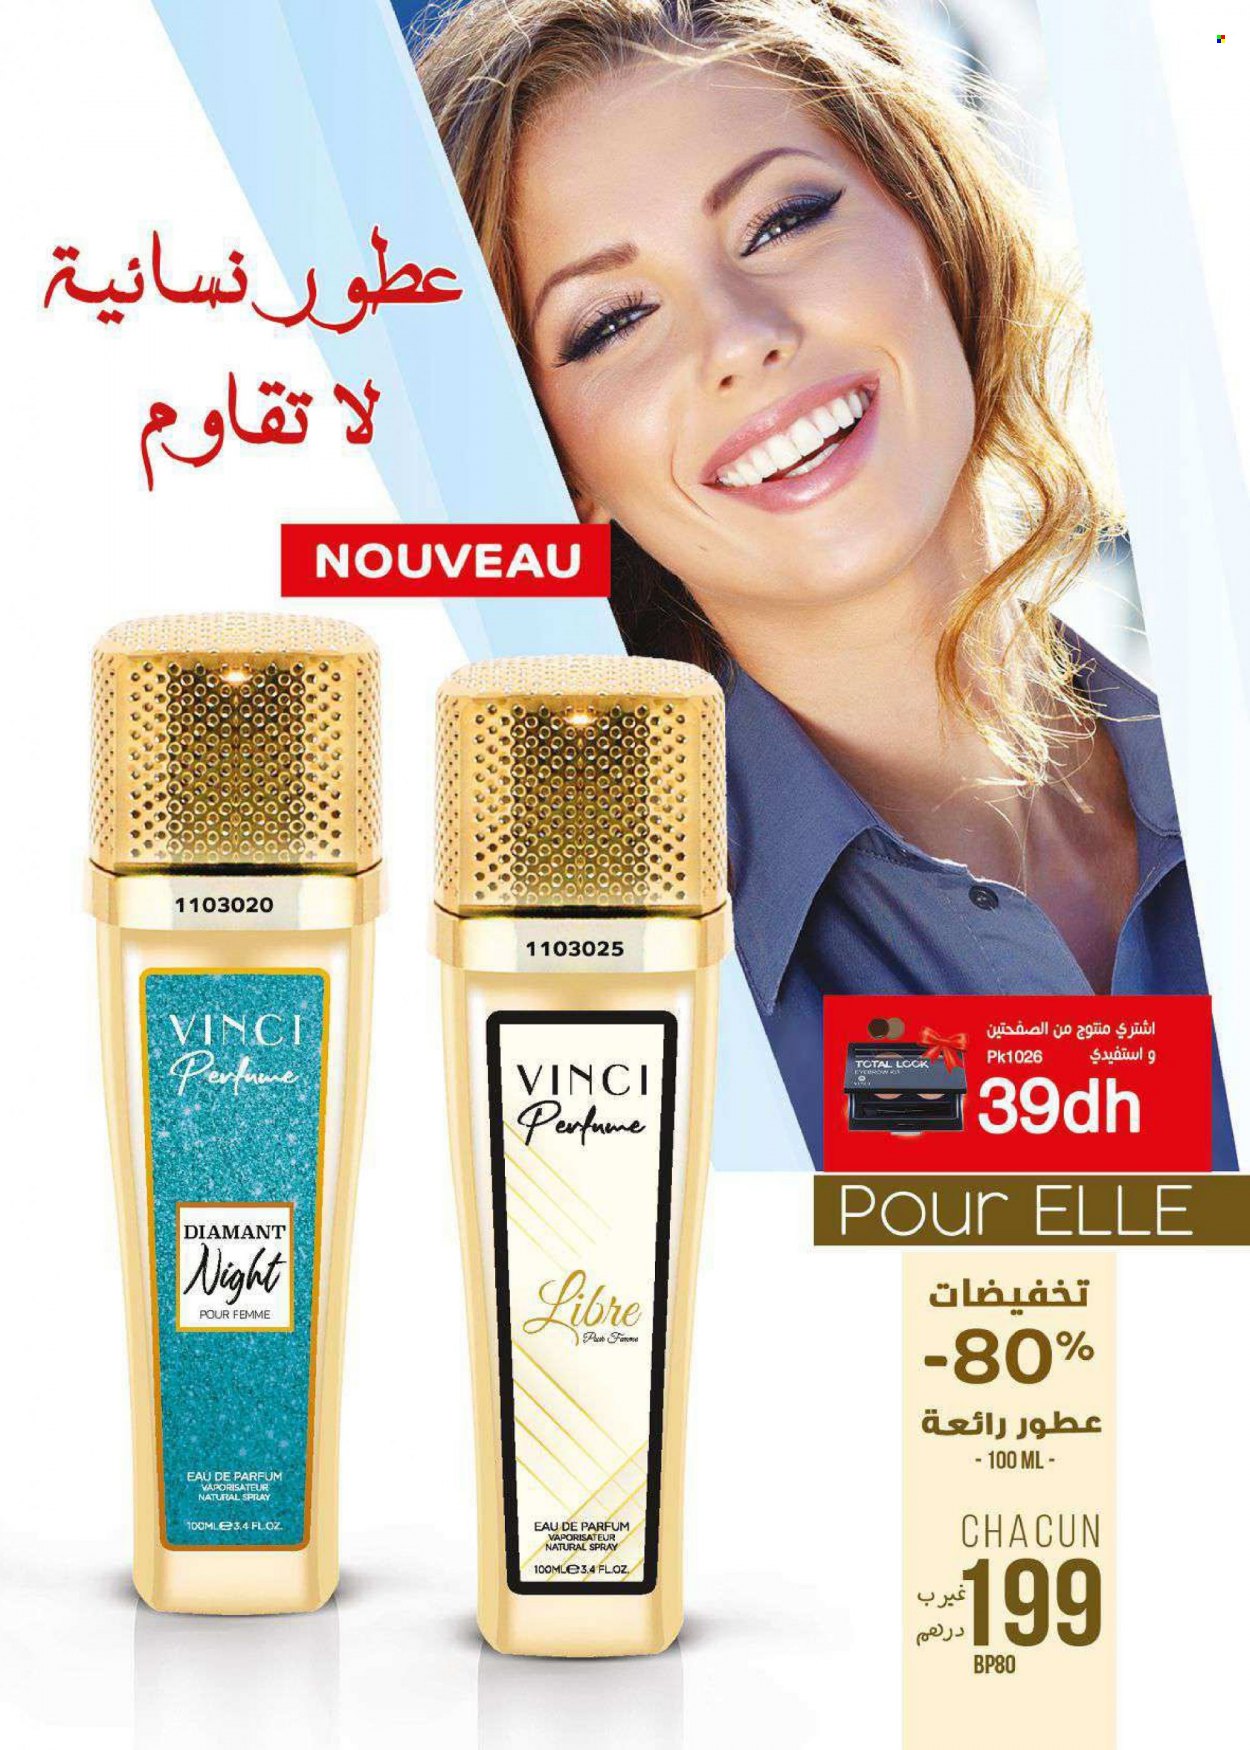 thumbnail - <magasin> - <du DD/MM/YYYY au DD/MM/YYYY> - Produits soldés - ,<products from flyers>. Page 25.